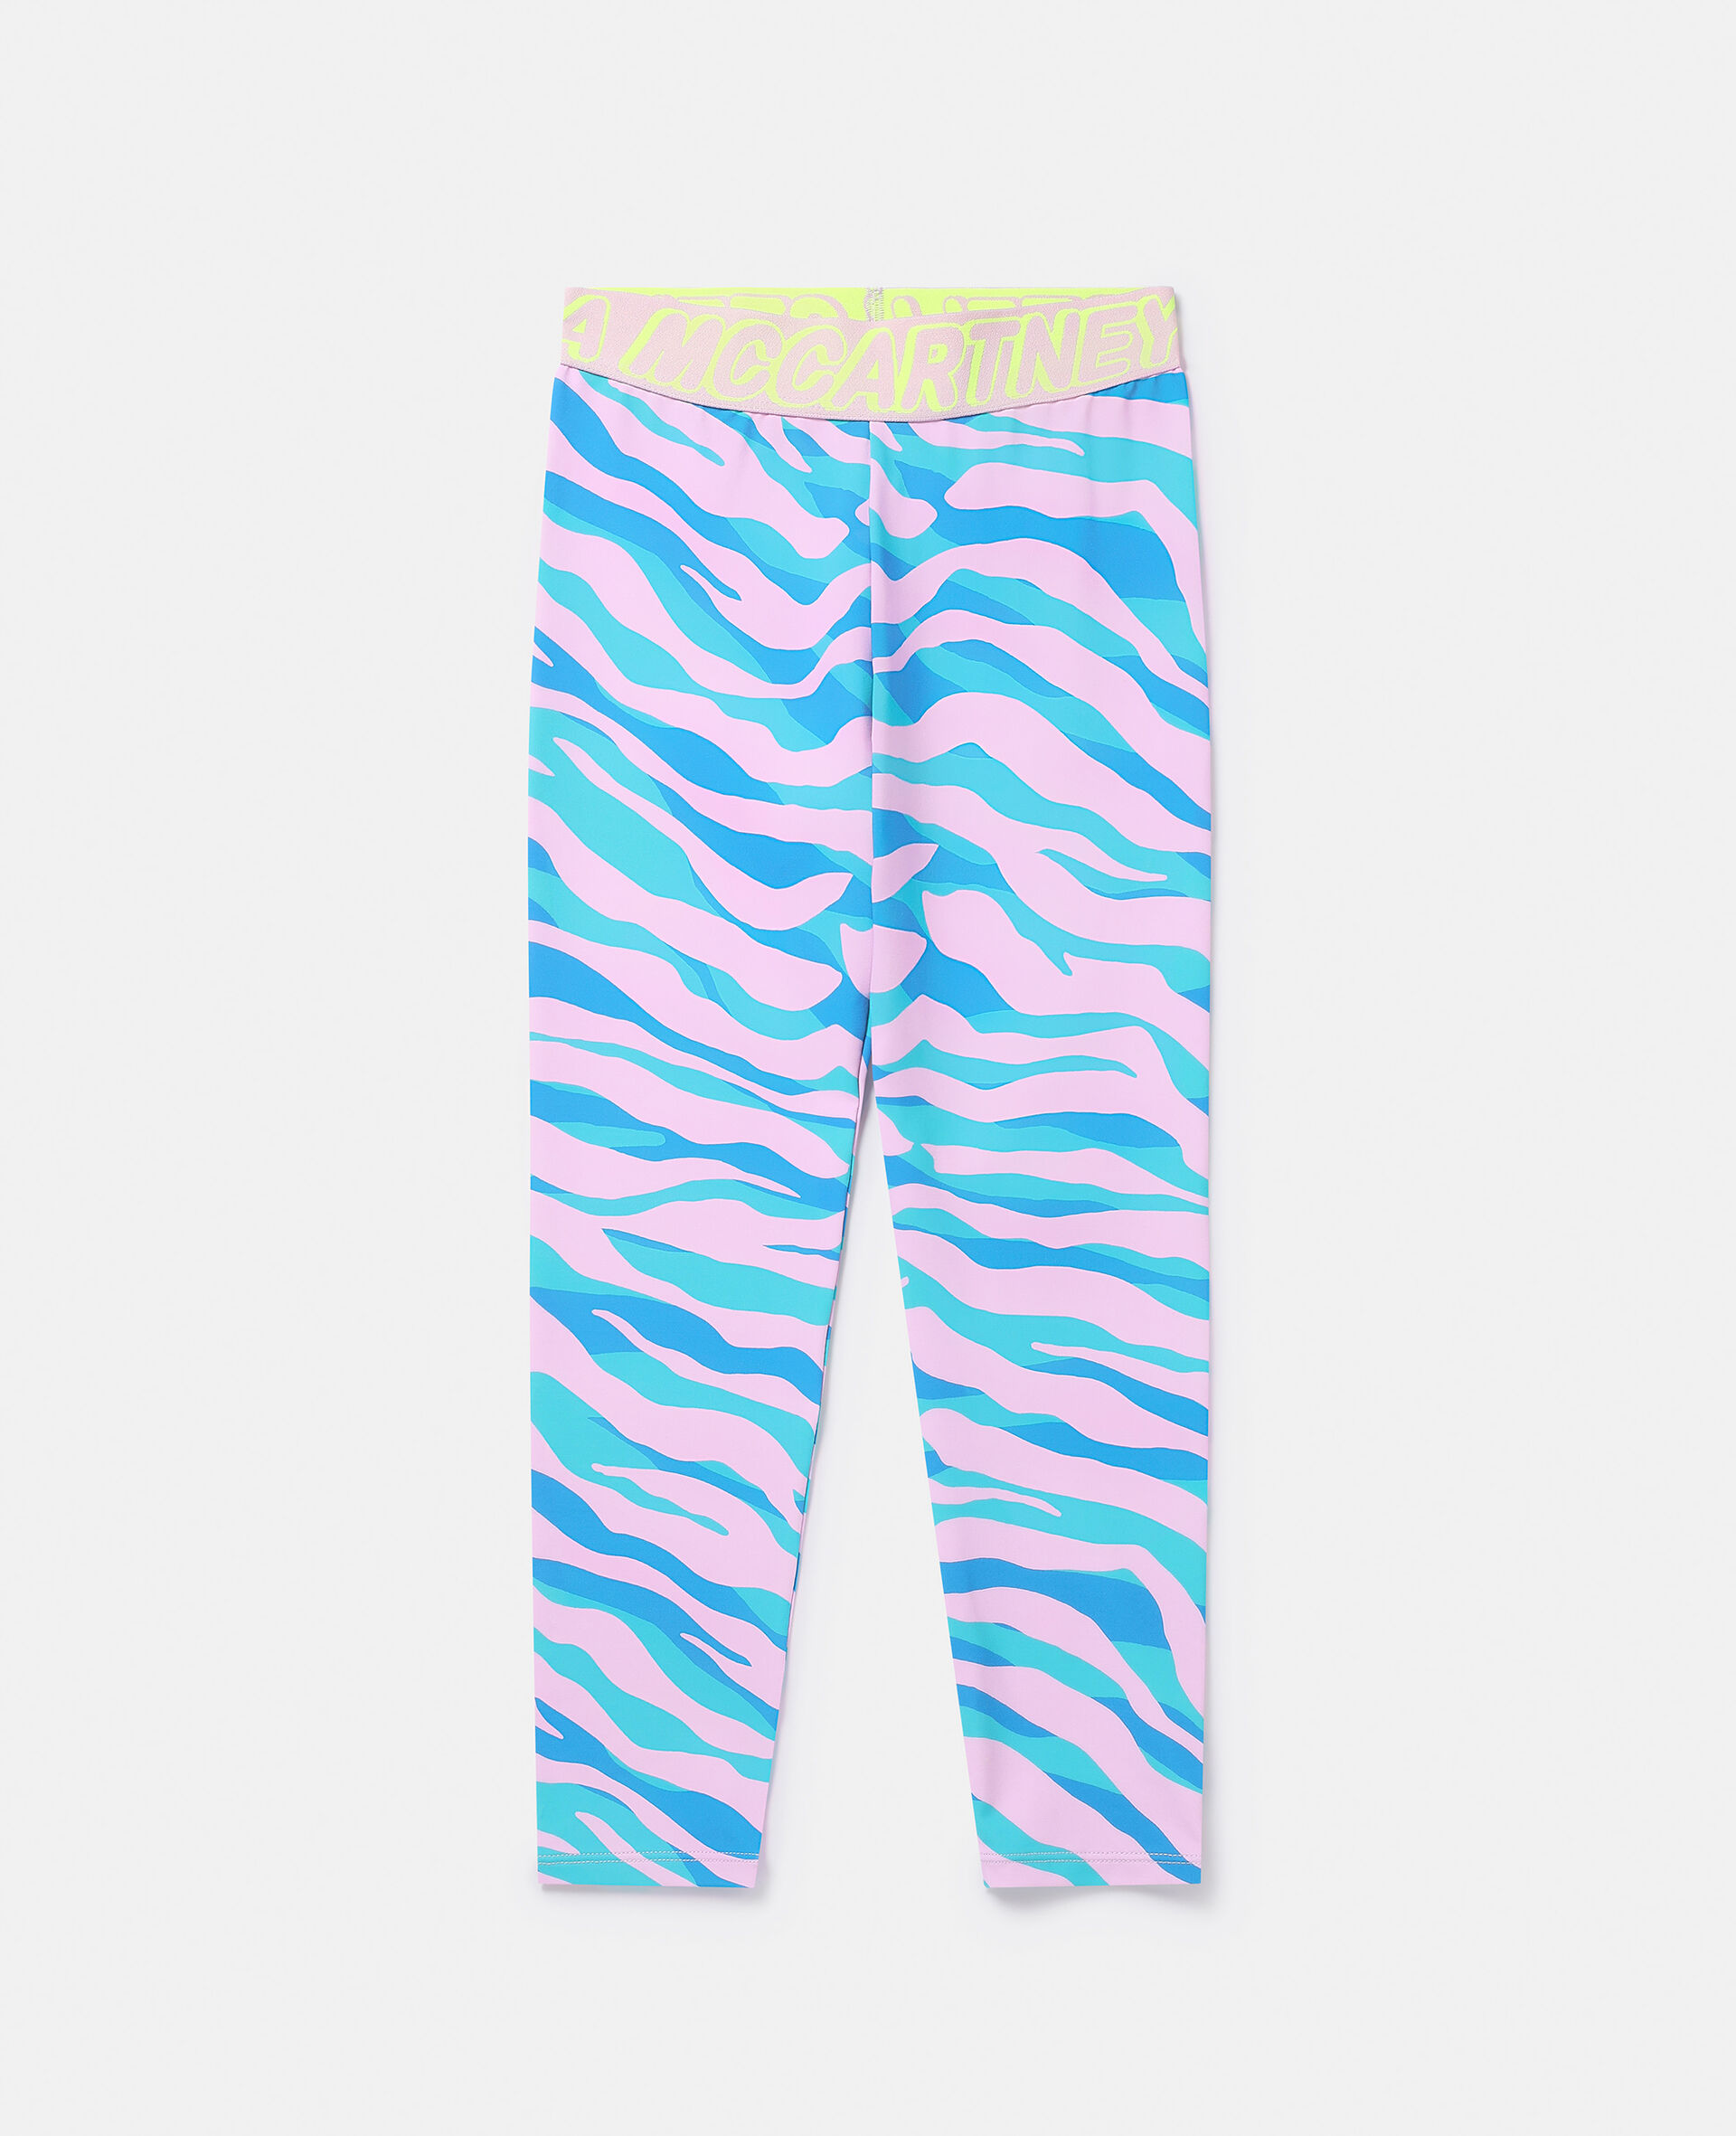 Zebra Print Leggings-Multicolored-large image number 0